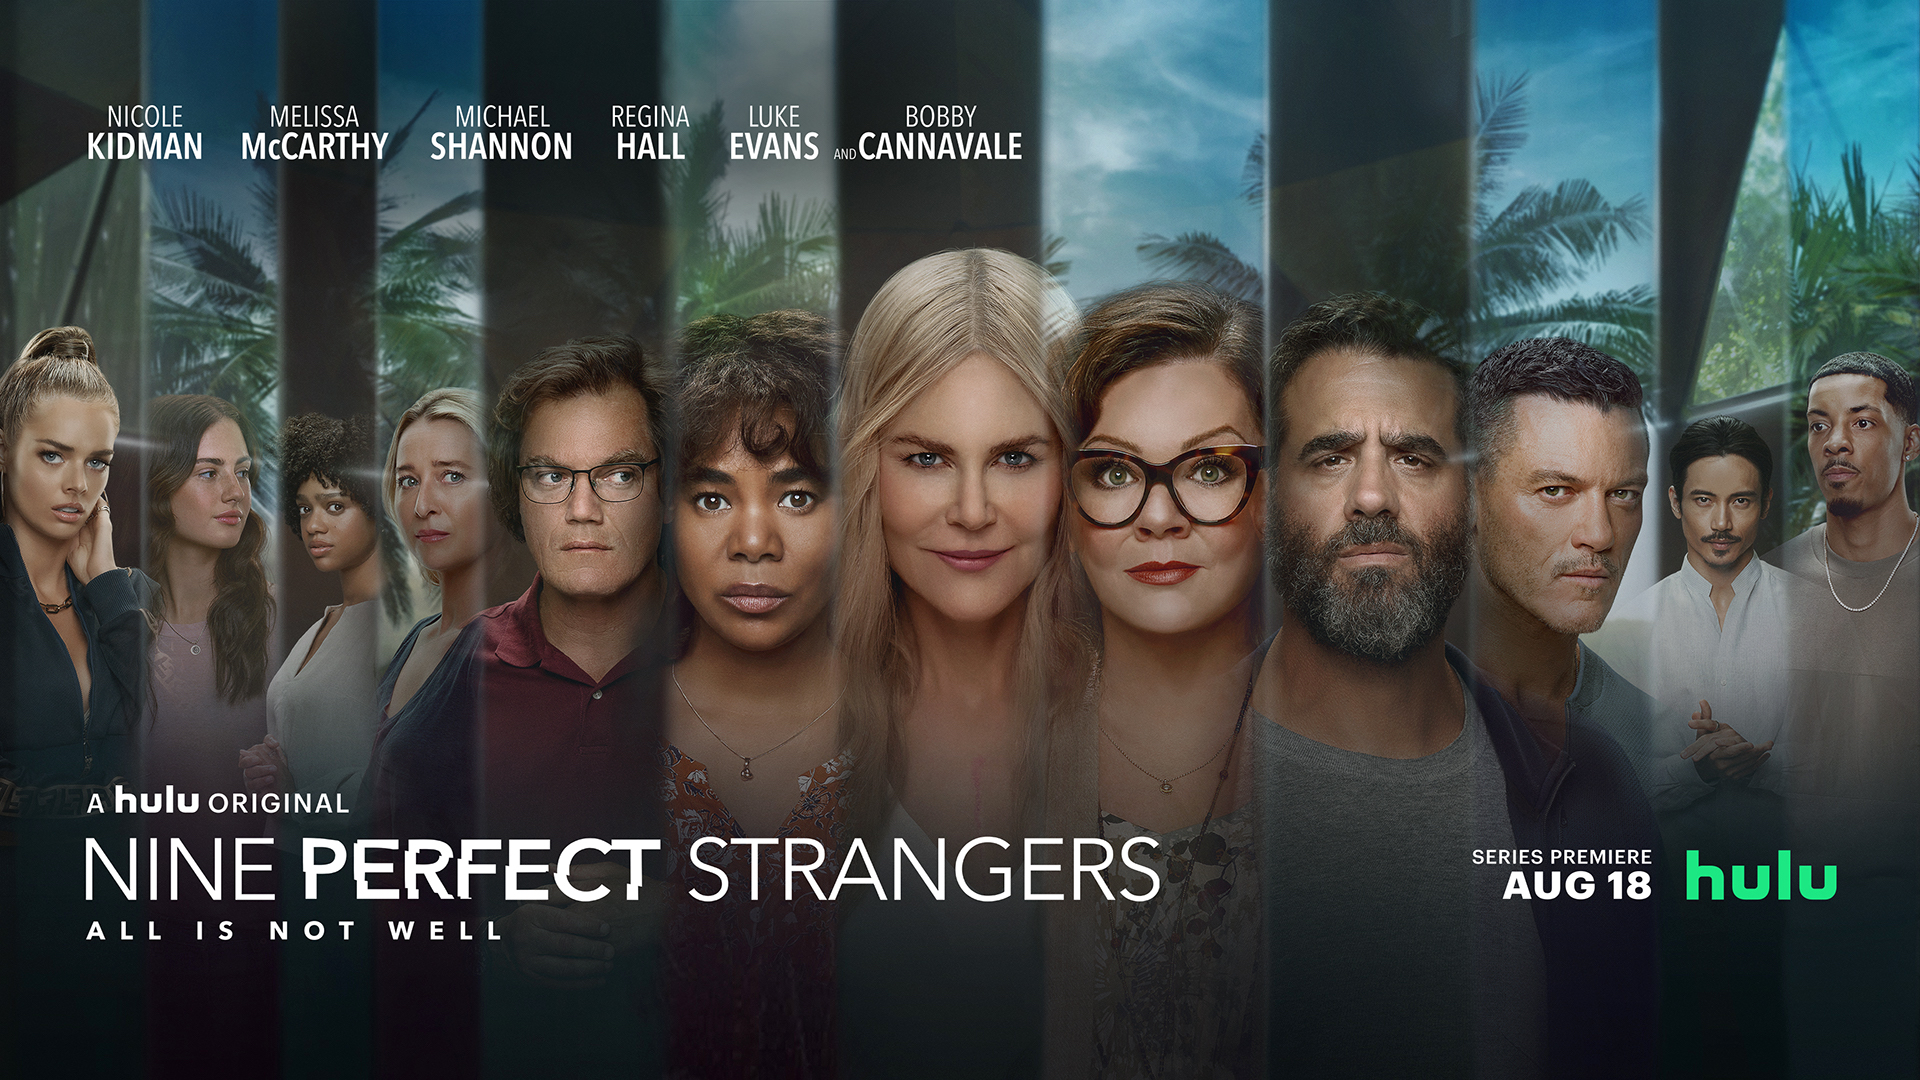 La miniserie "Nine Perfect Strangers" estrena su trailer oficial - Diario  Vivo